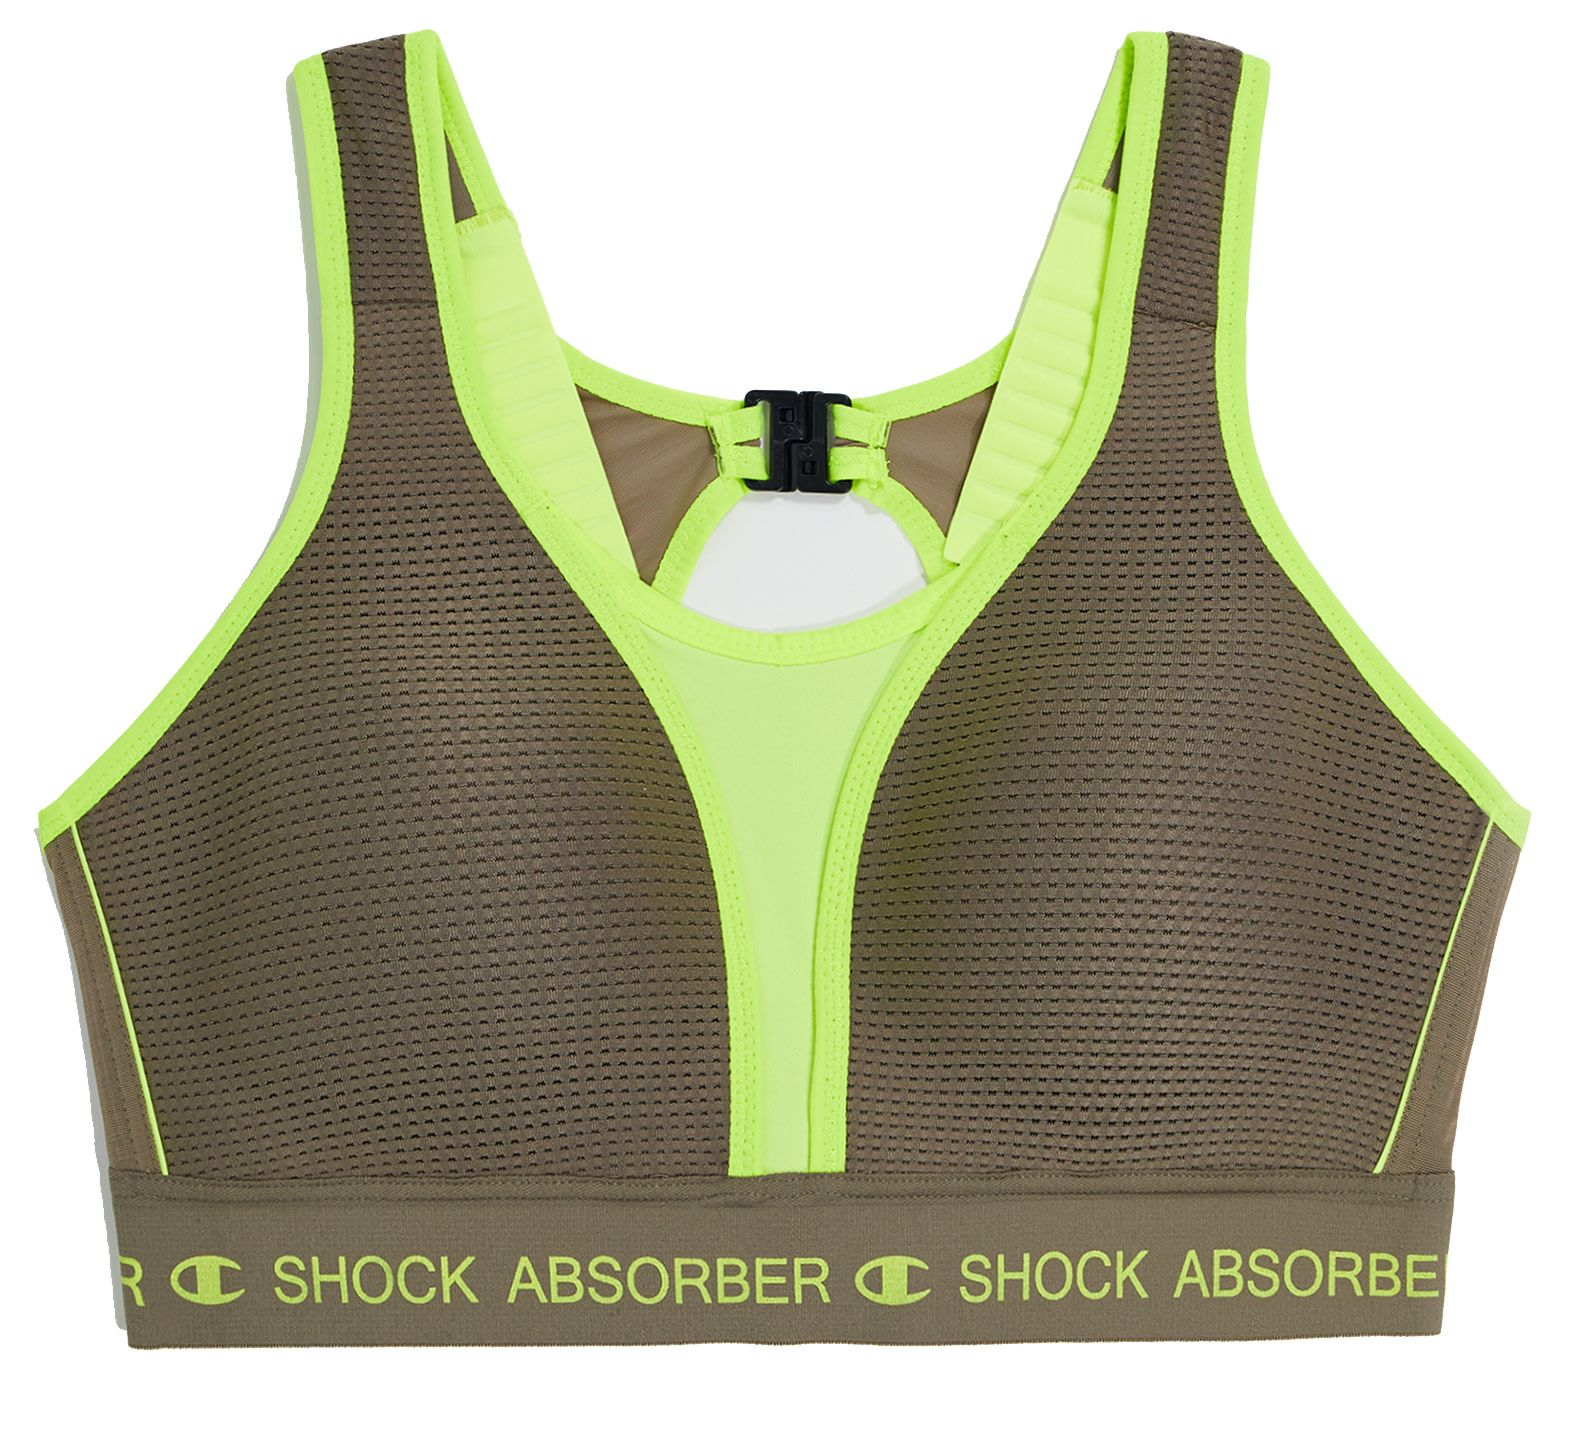 https://www.fjellsport.no/assets/blobs/shock-absorber-women-s-ultimate-run-bra-padded-green-3e7f9bae9f.jpeg?preset=medium&dpr=2